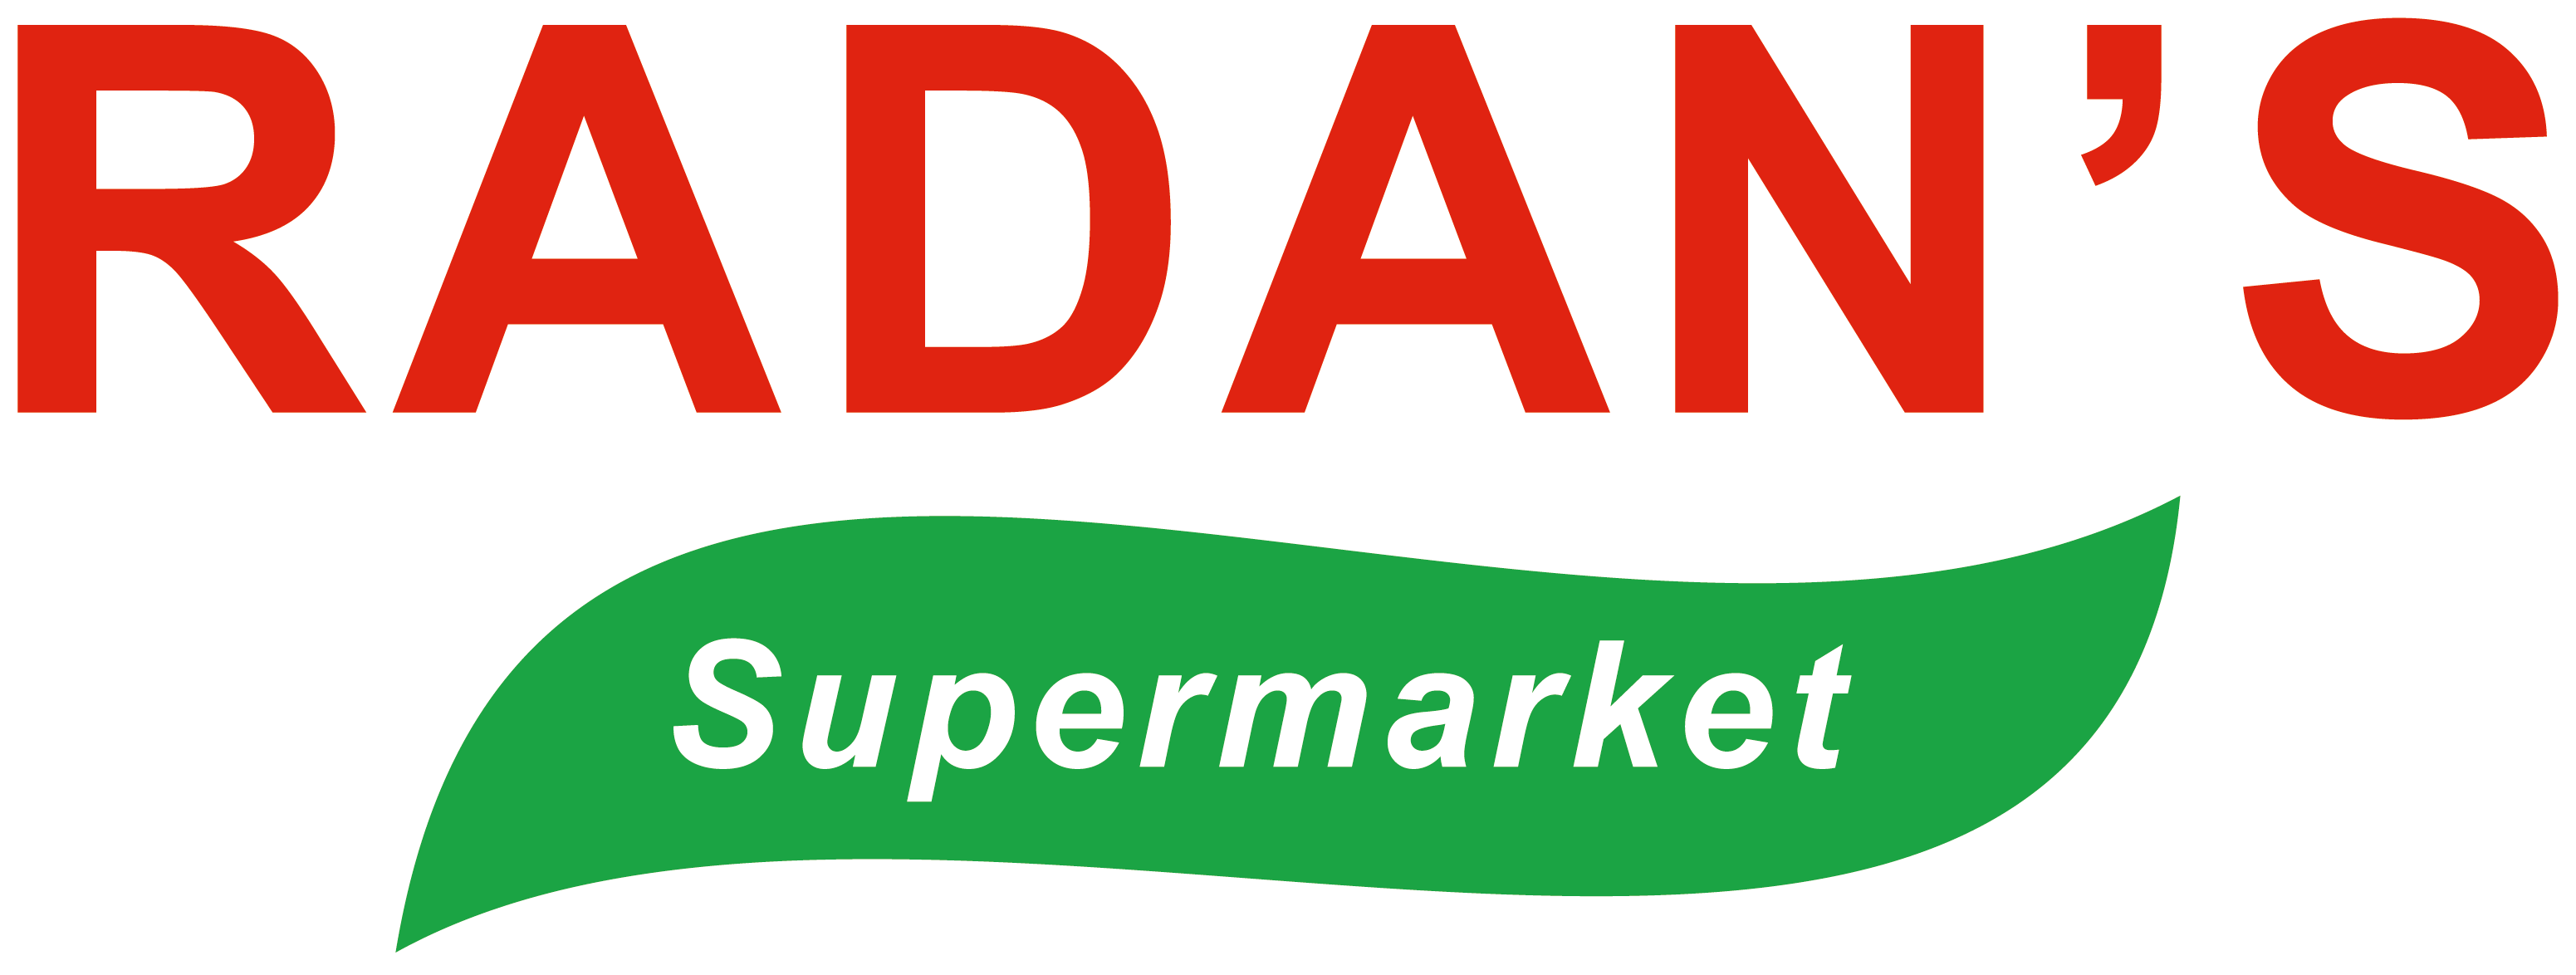 Radan's Supermarket